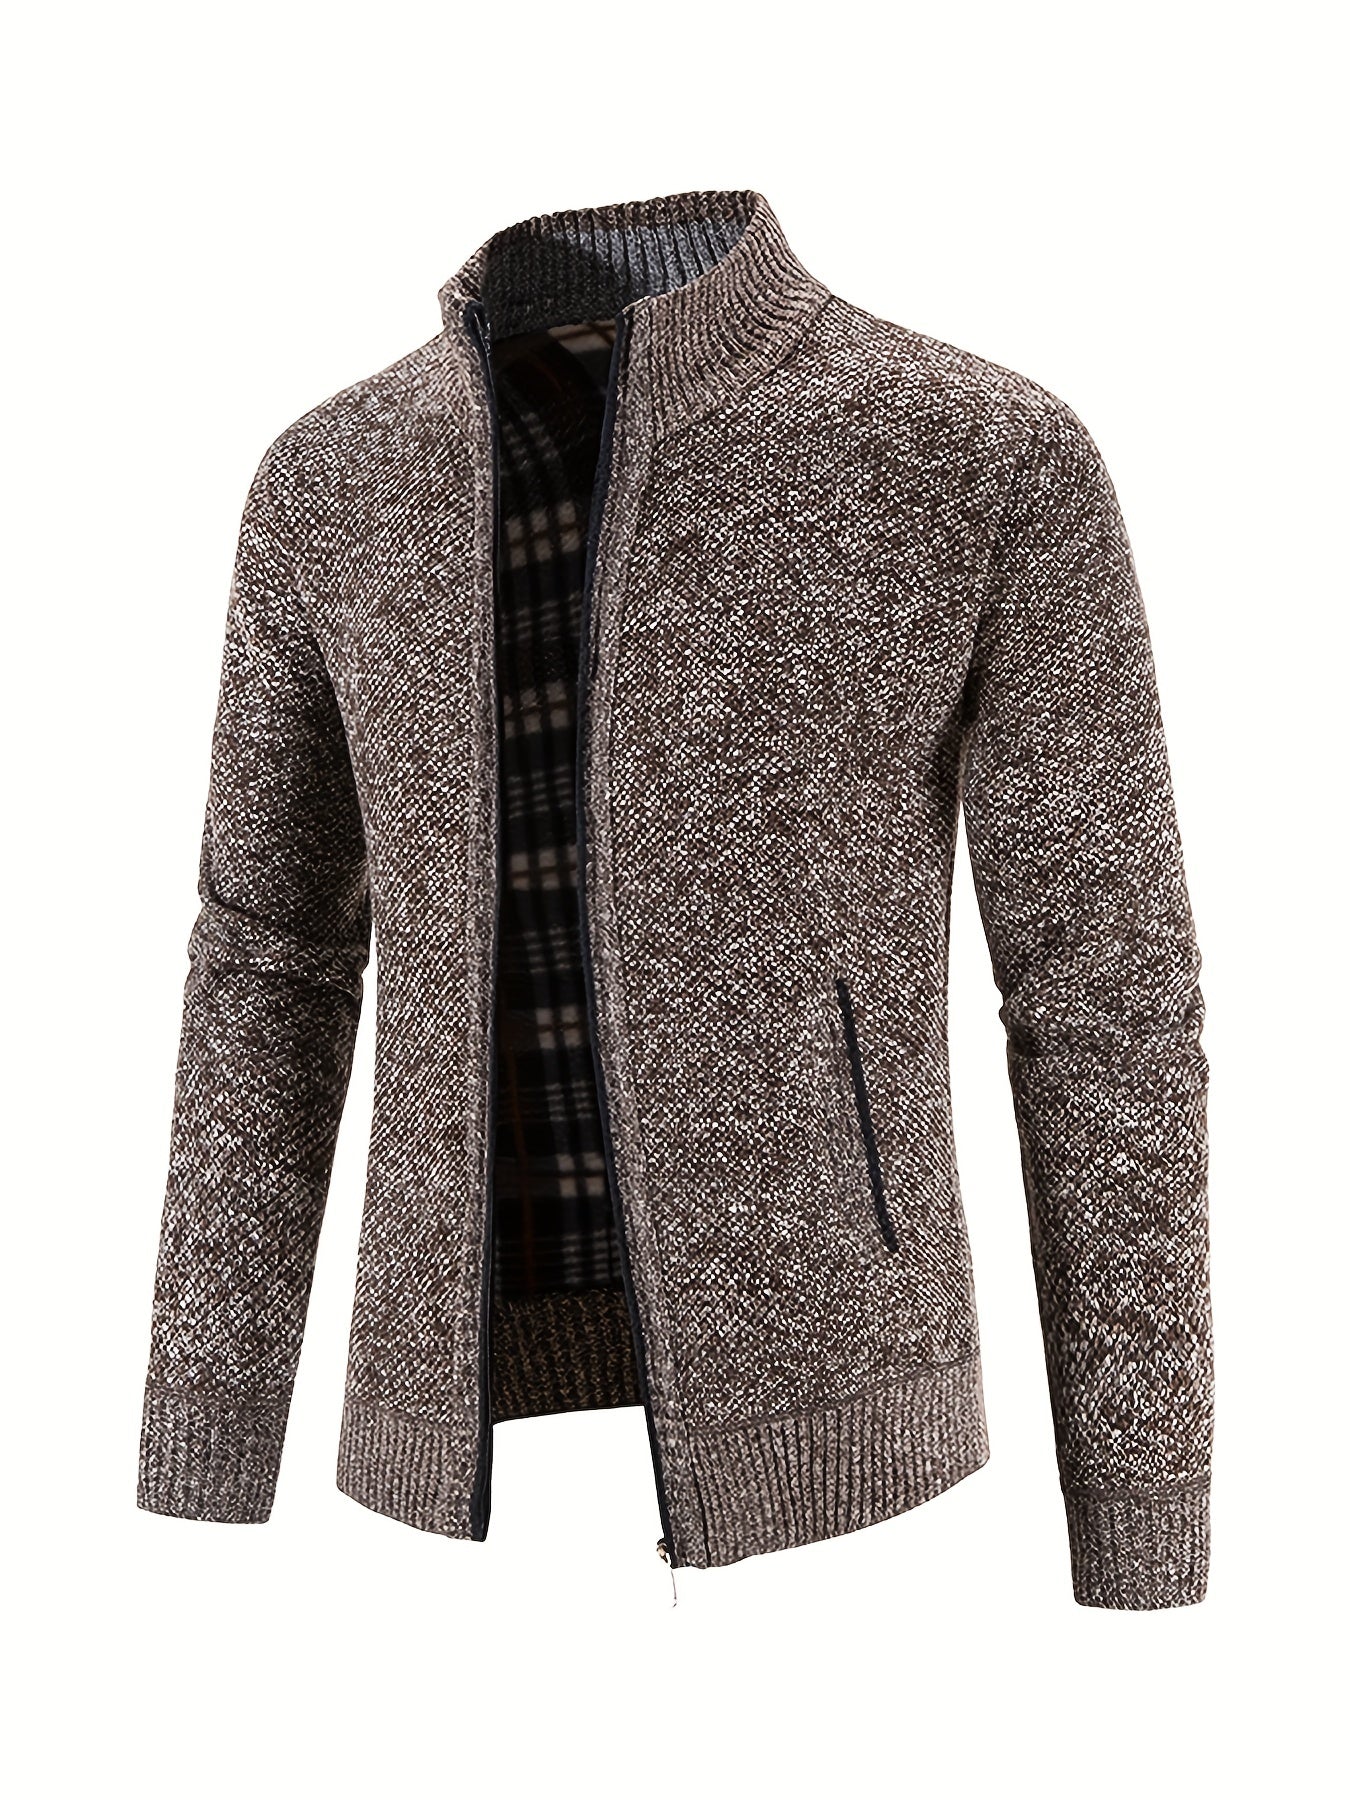 Foruwish - Men's Full Zip Up Casual Cardigan, Patchwork Thermal Regular Fit Knit Sweater